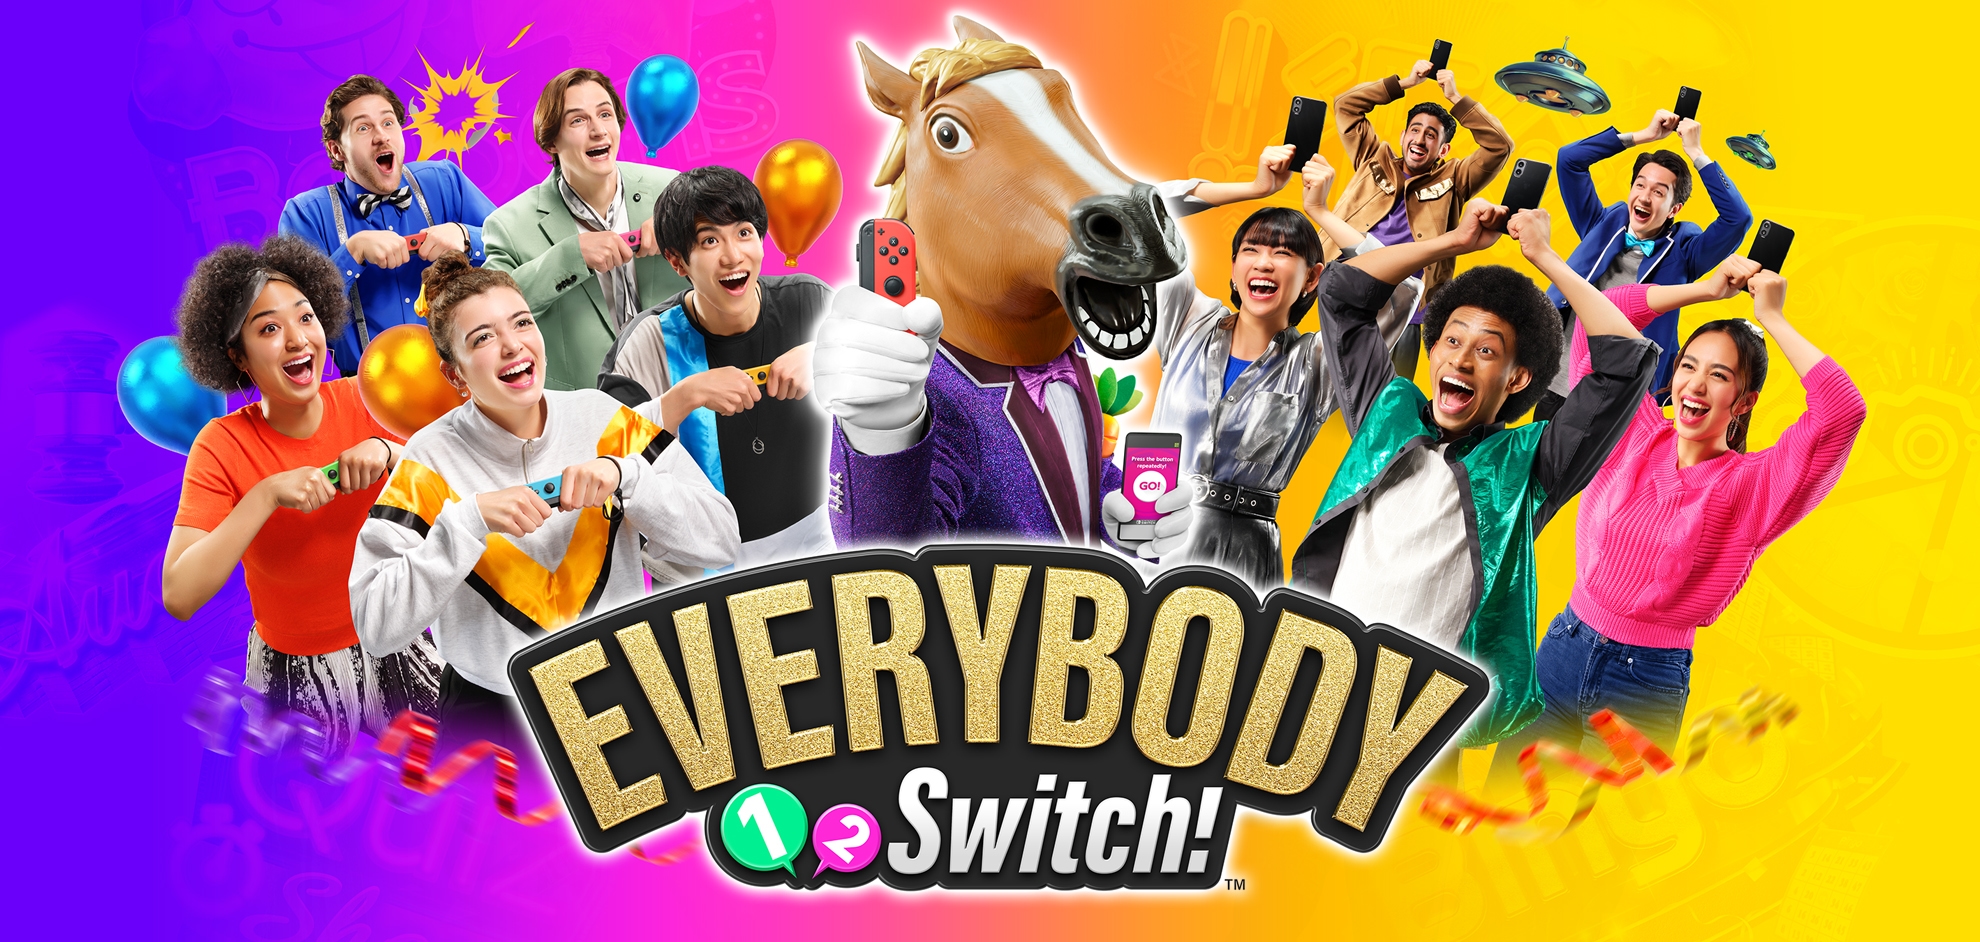 Everybody 1-2-Switch!™